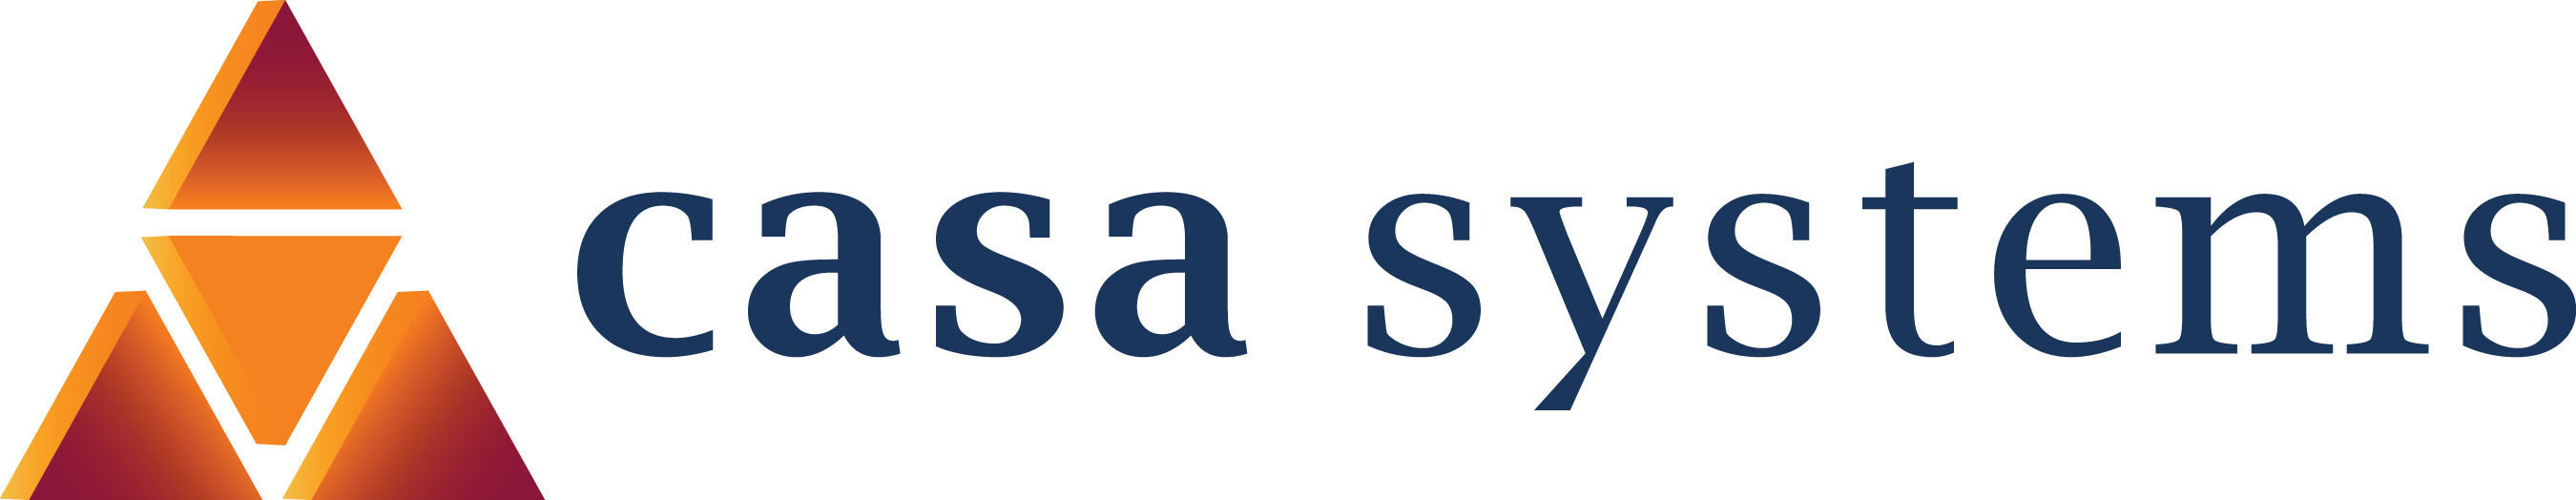 Casa Systems, Inc. Logo (PRNewsFoto/Casa Systems, Inc.)